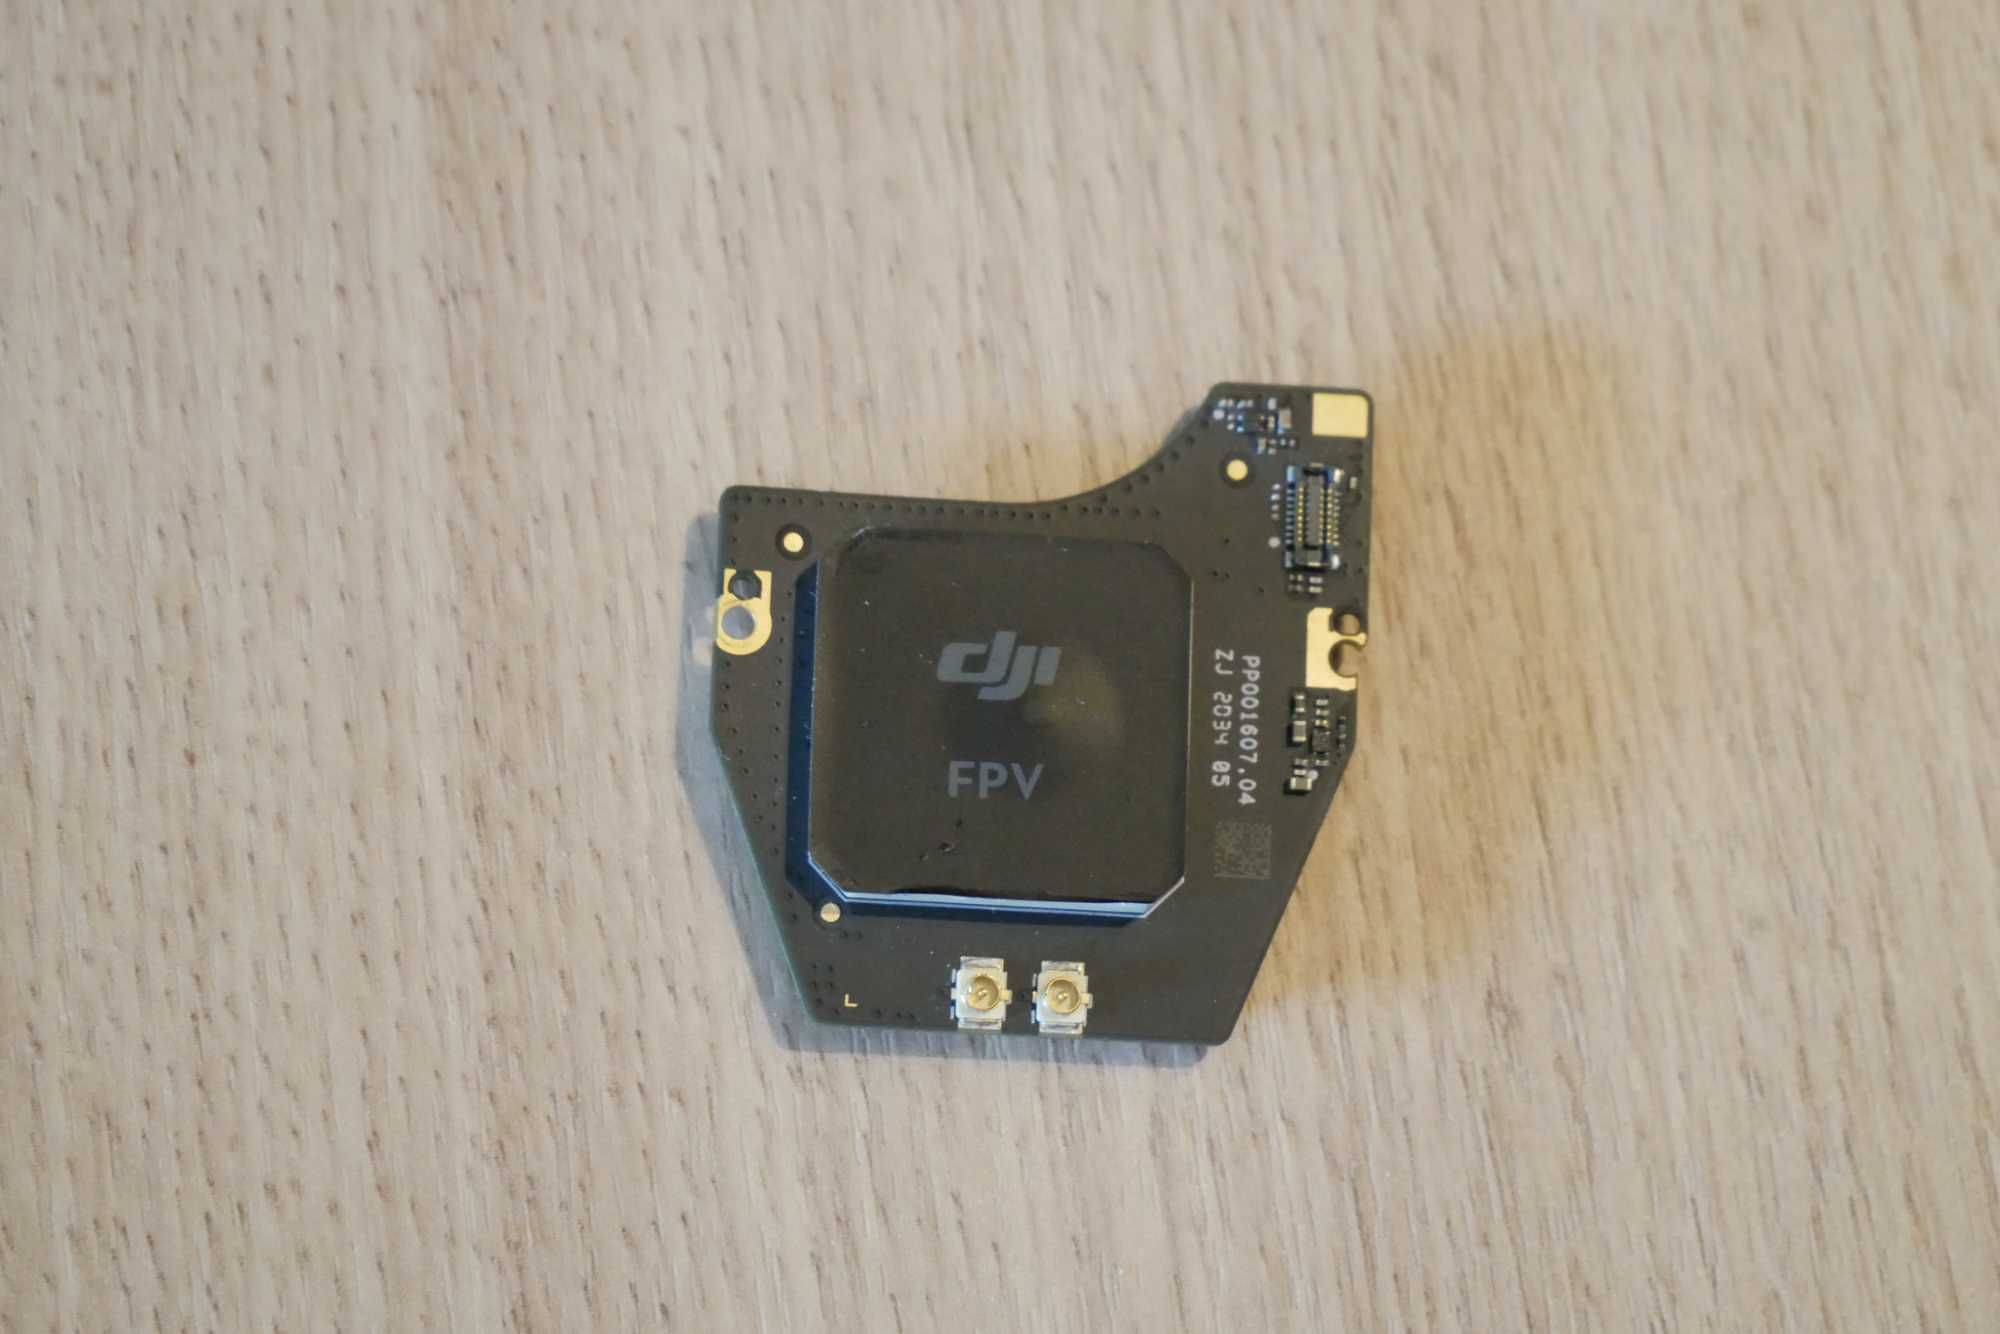 DJI FPV moduł GPS - oryginał